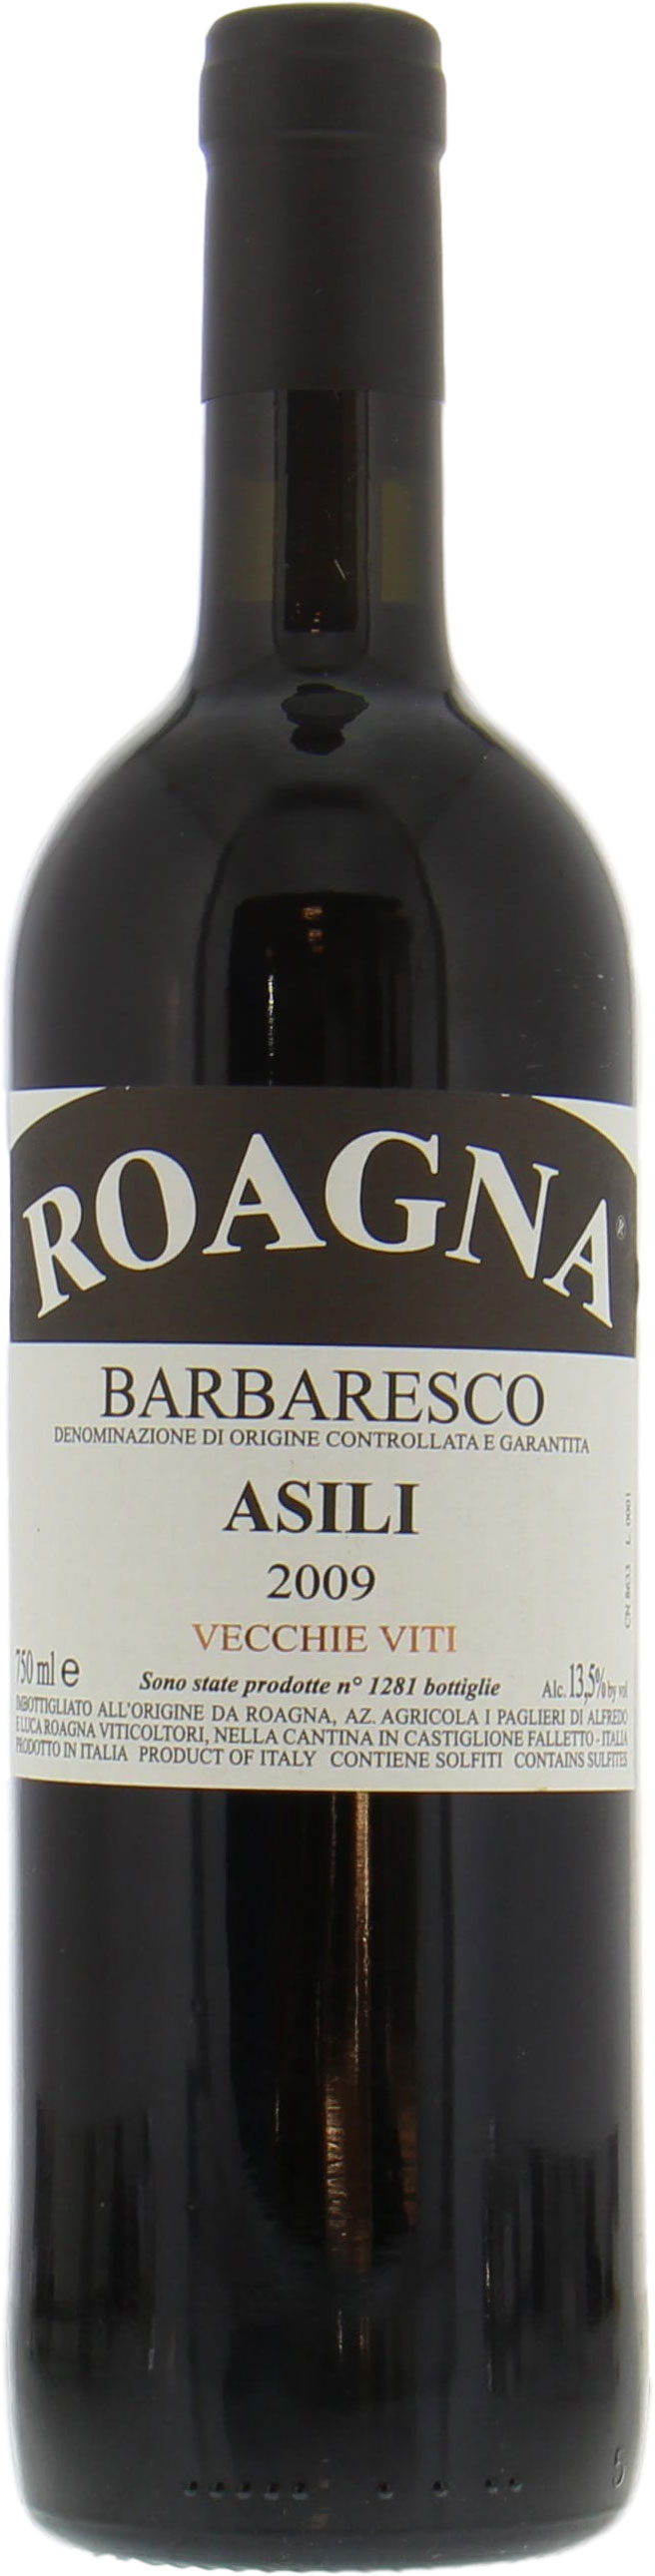 Roagna - Barbaresco Asili Vecchie Vigne 2009 Perfect